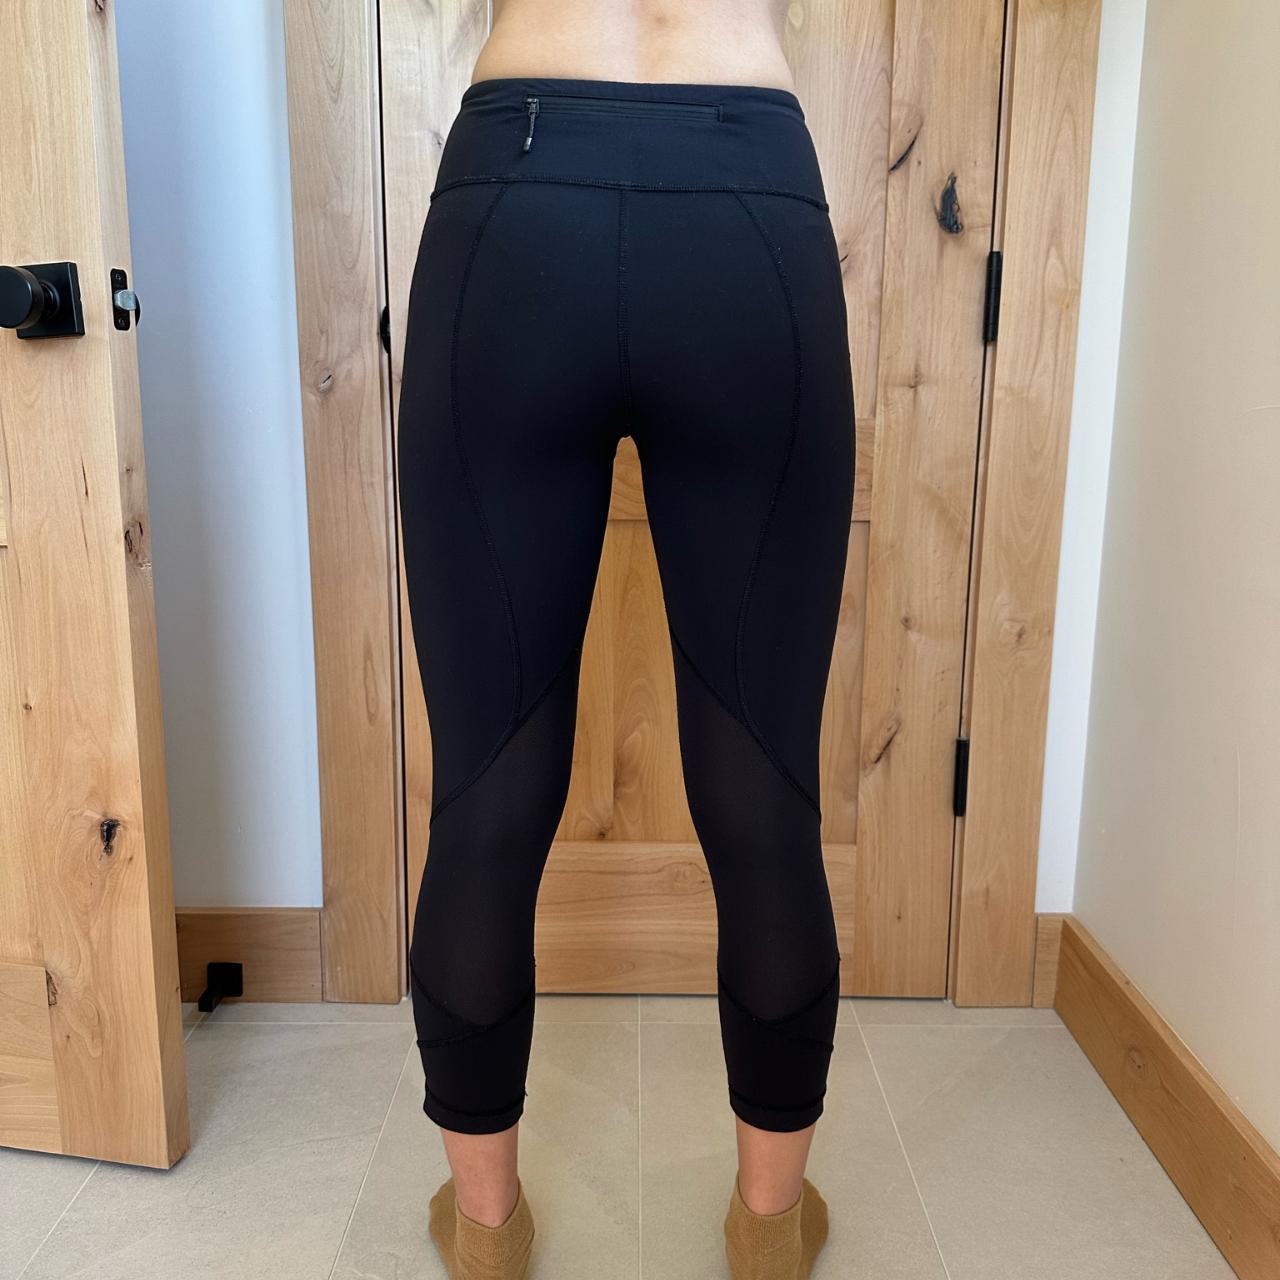 Lululemon yoga pants size 4 - Depop